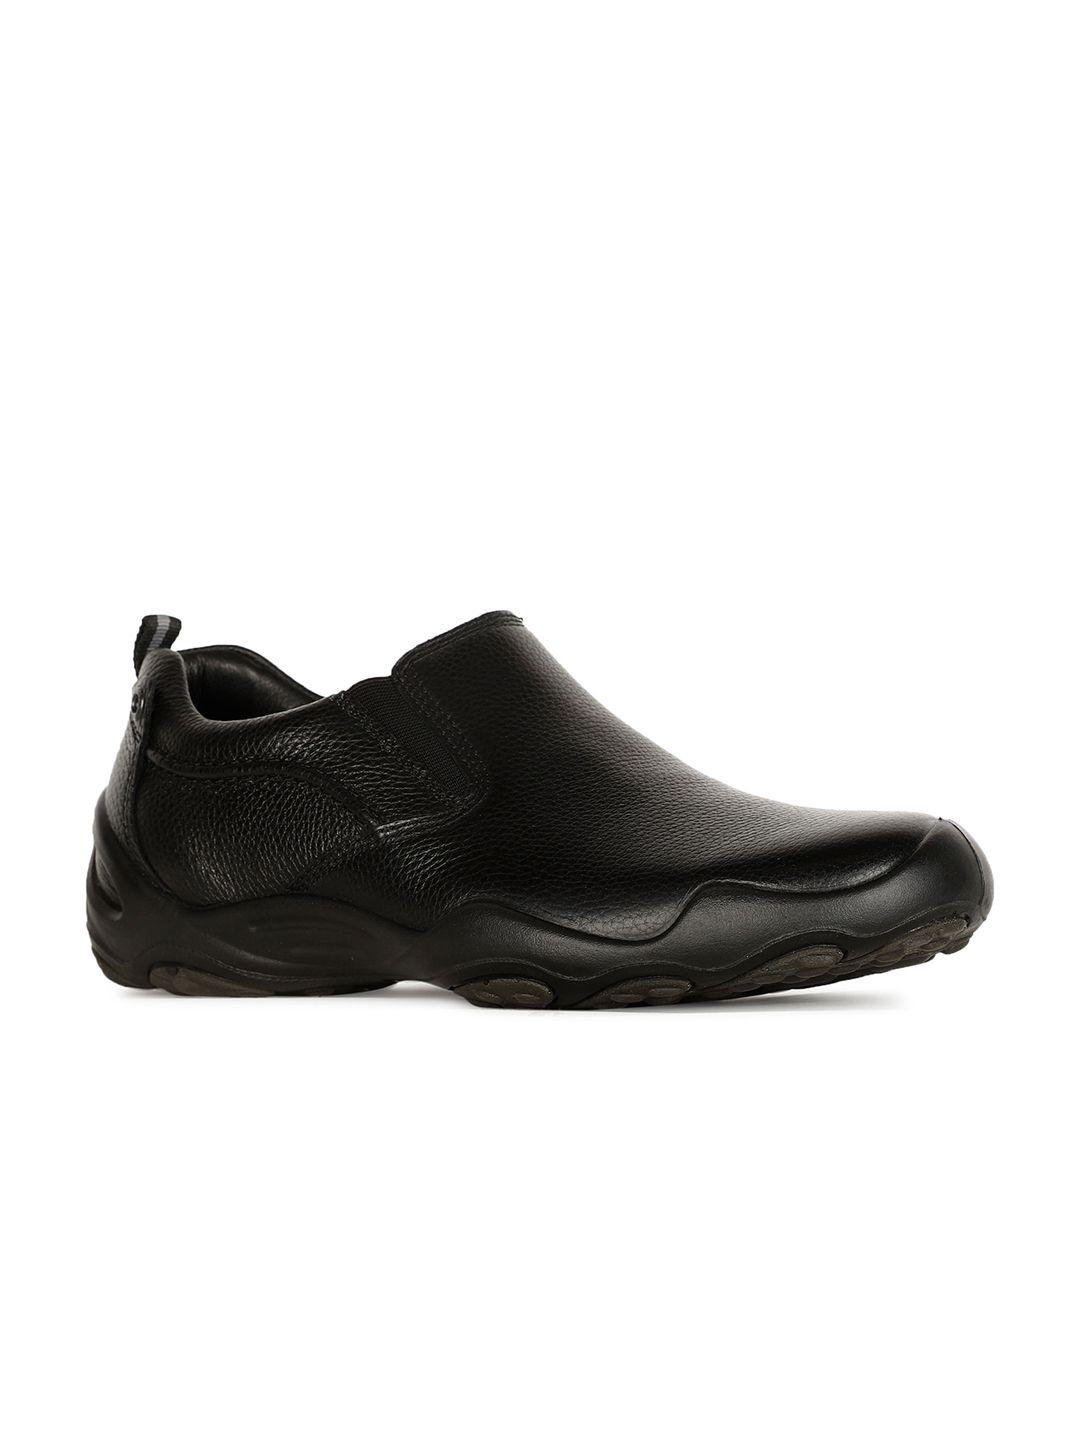 hush-puppies-men-black-textured-leather-slip-on-sneakers